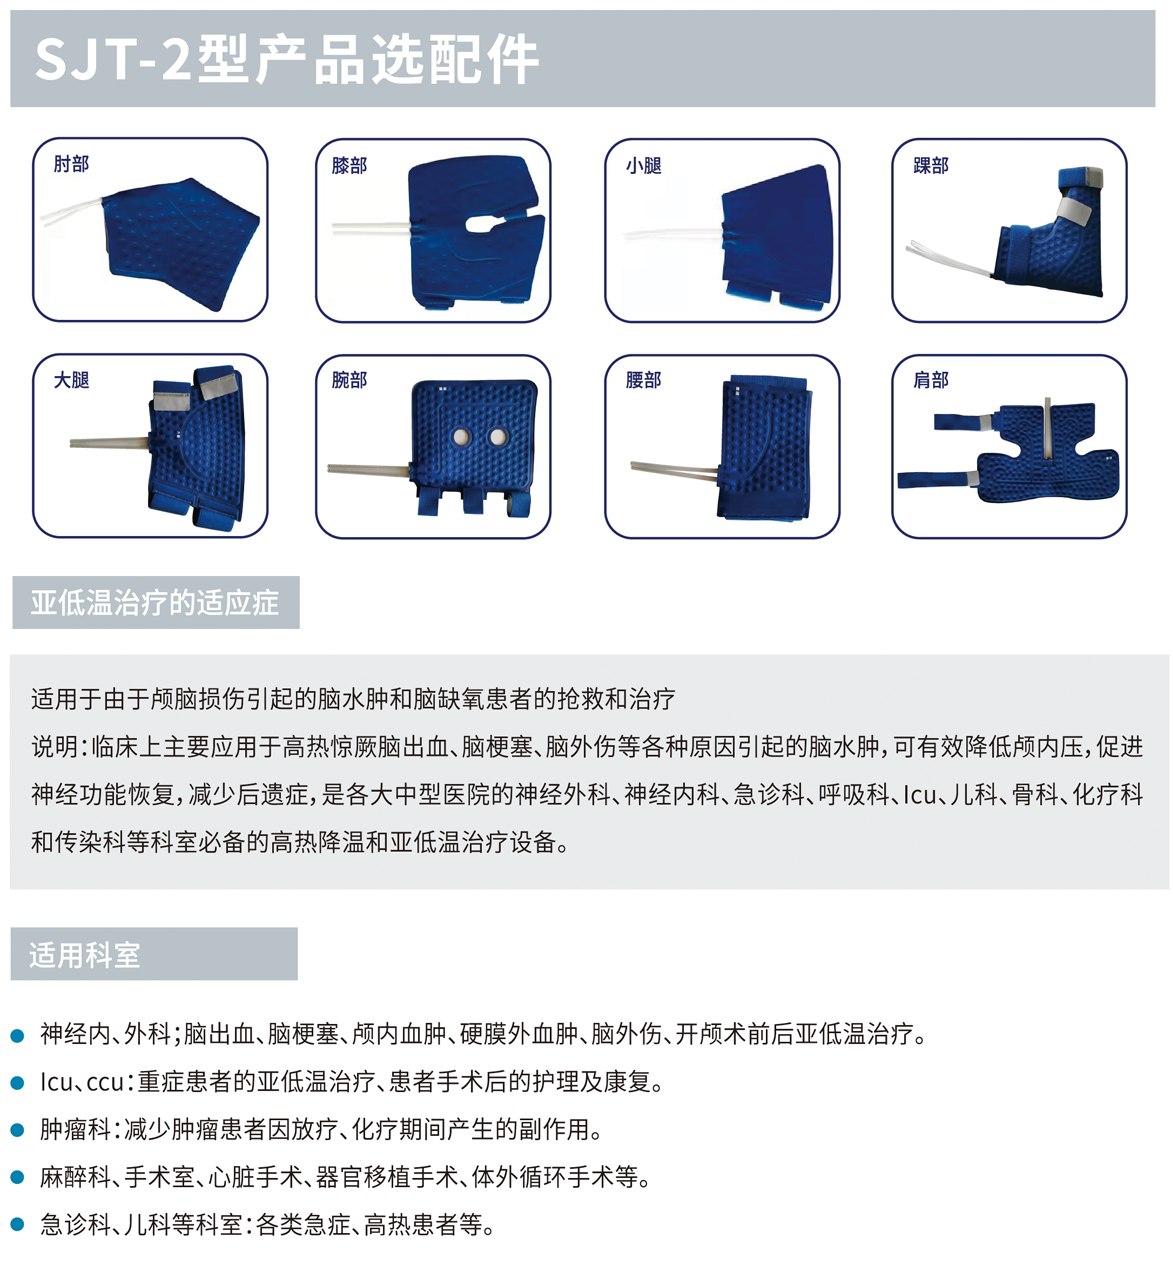 SJT-2型产品选配件.png